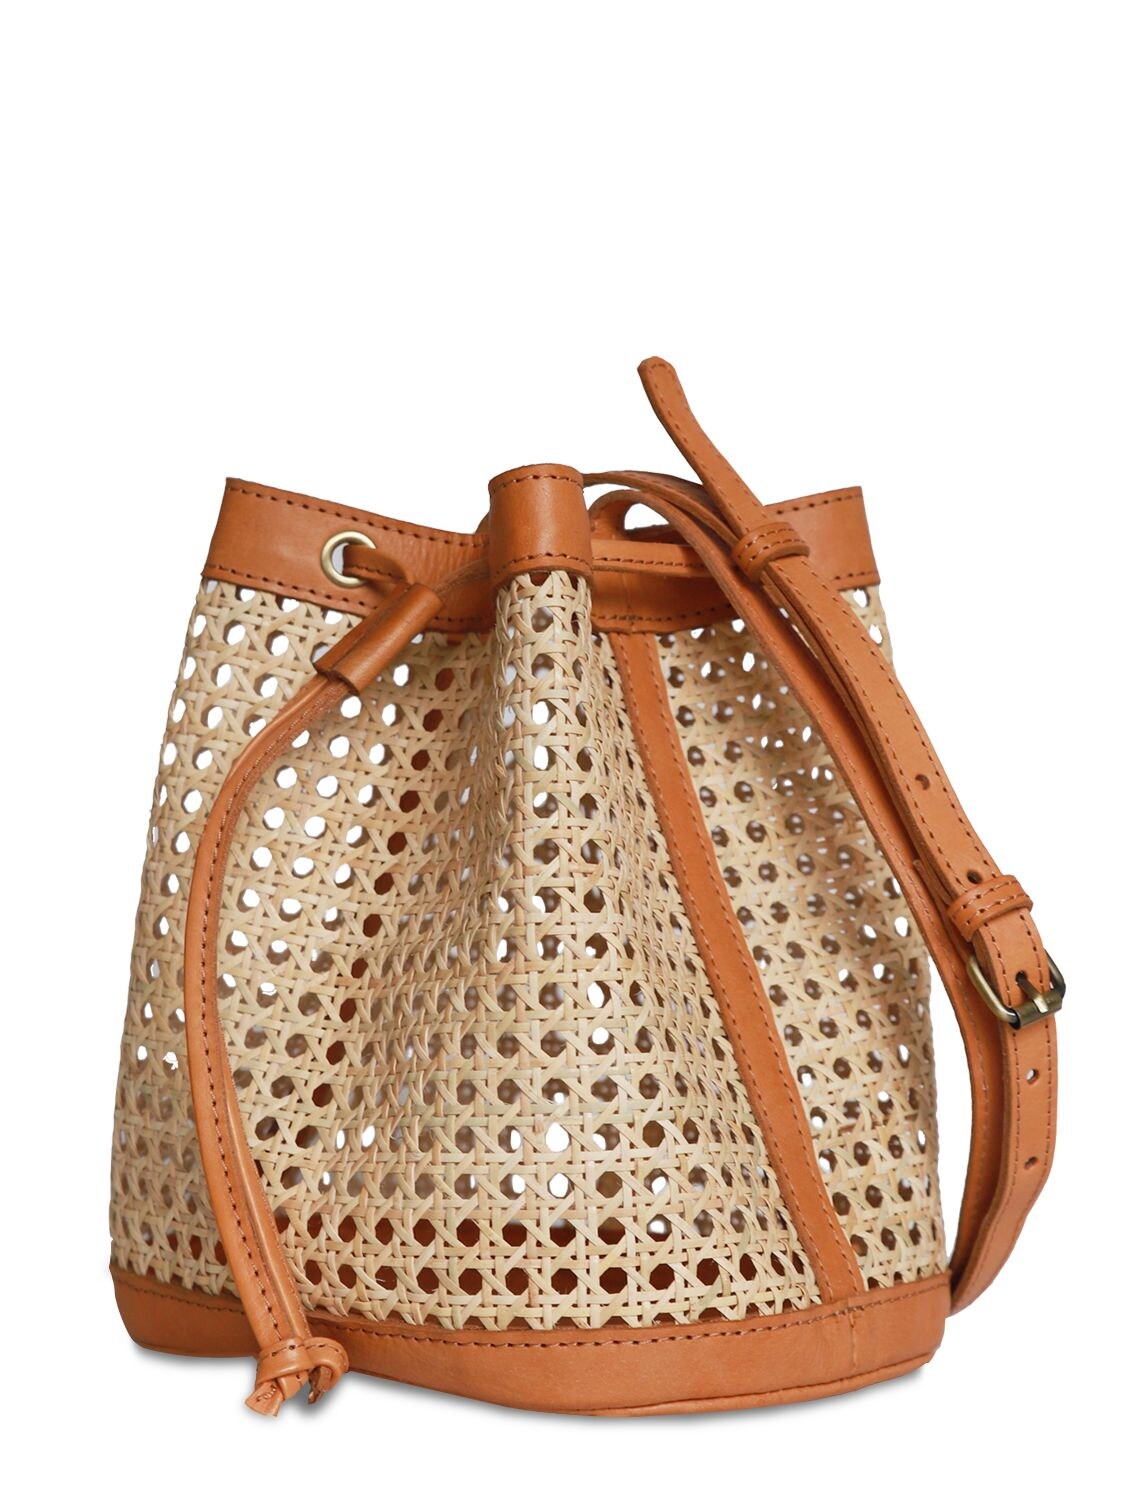 Bembien Benna Rattan & Leather Bucket Bag In Natural,caramel | ModeSens